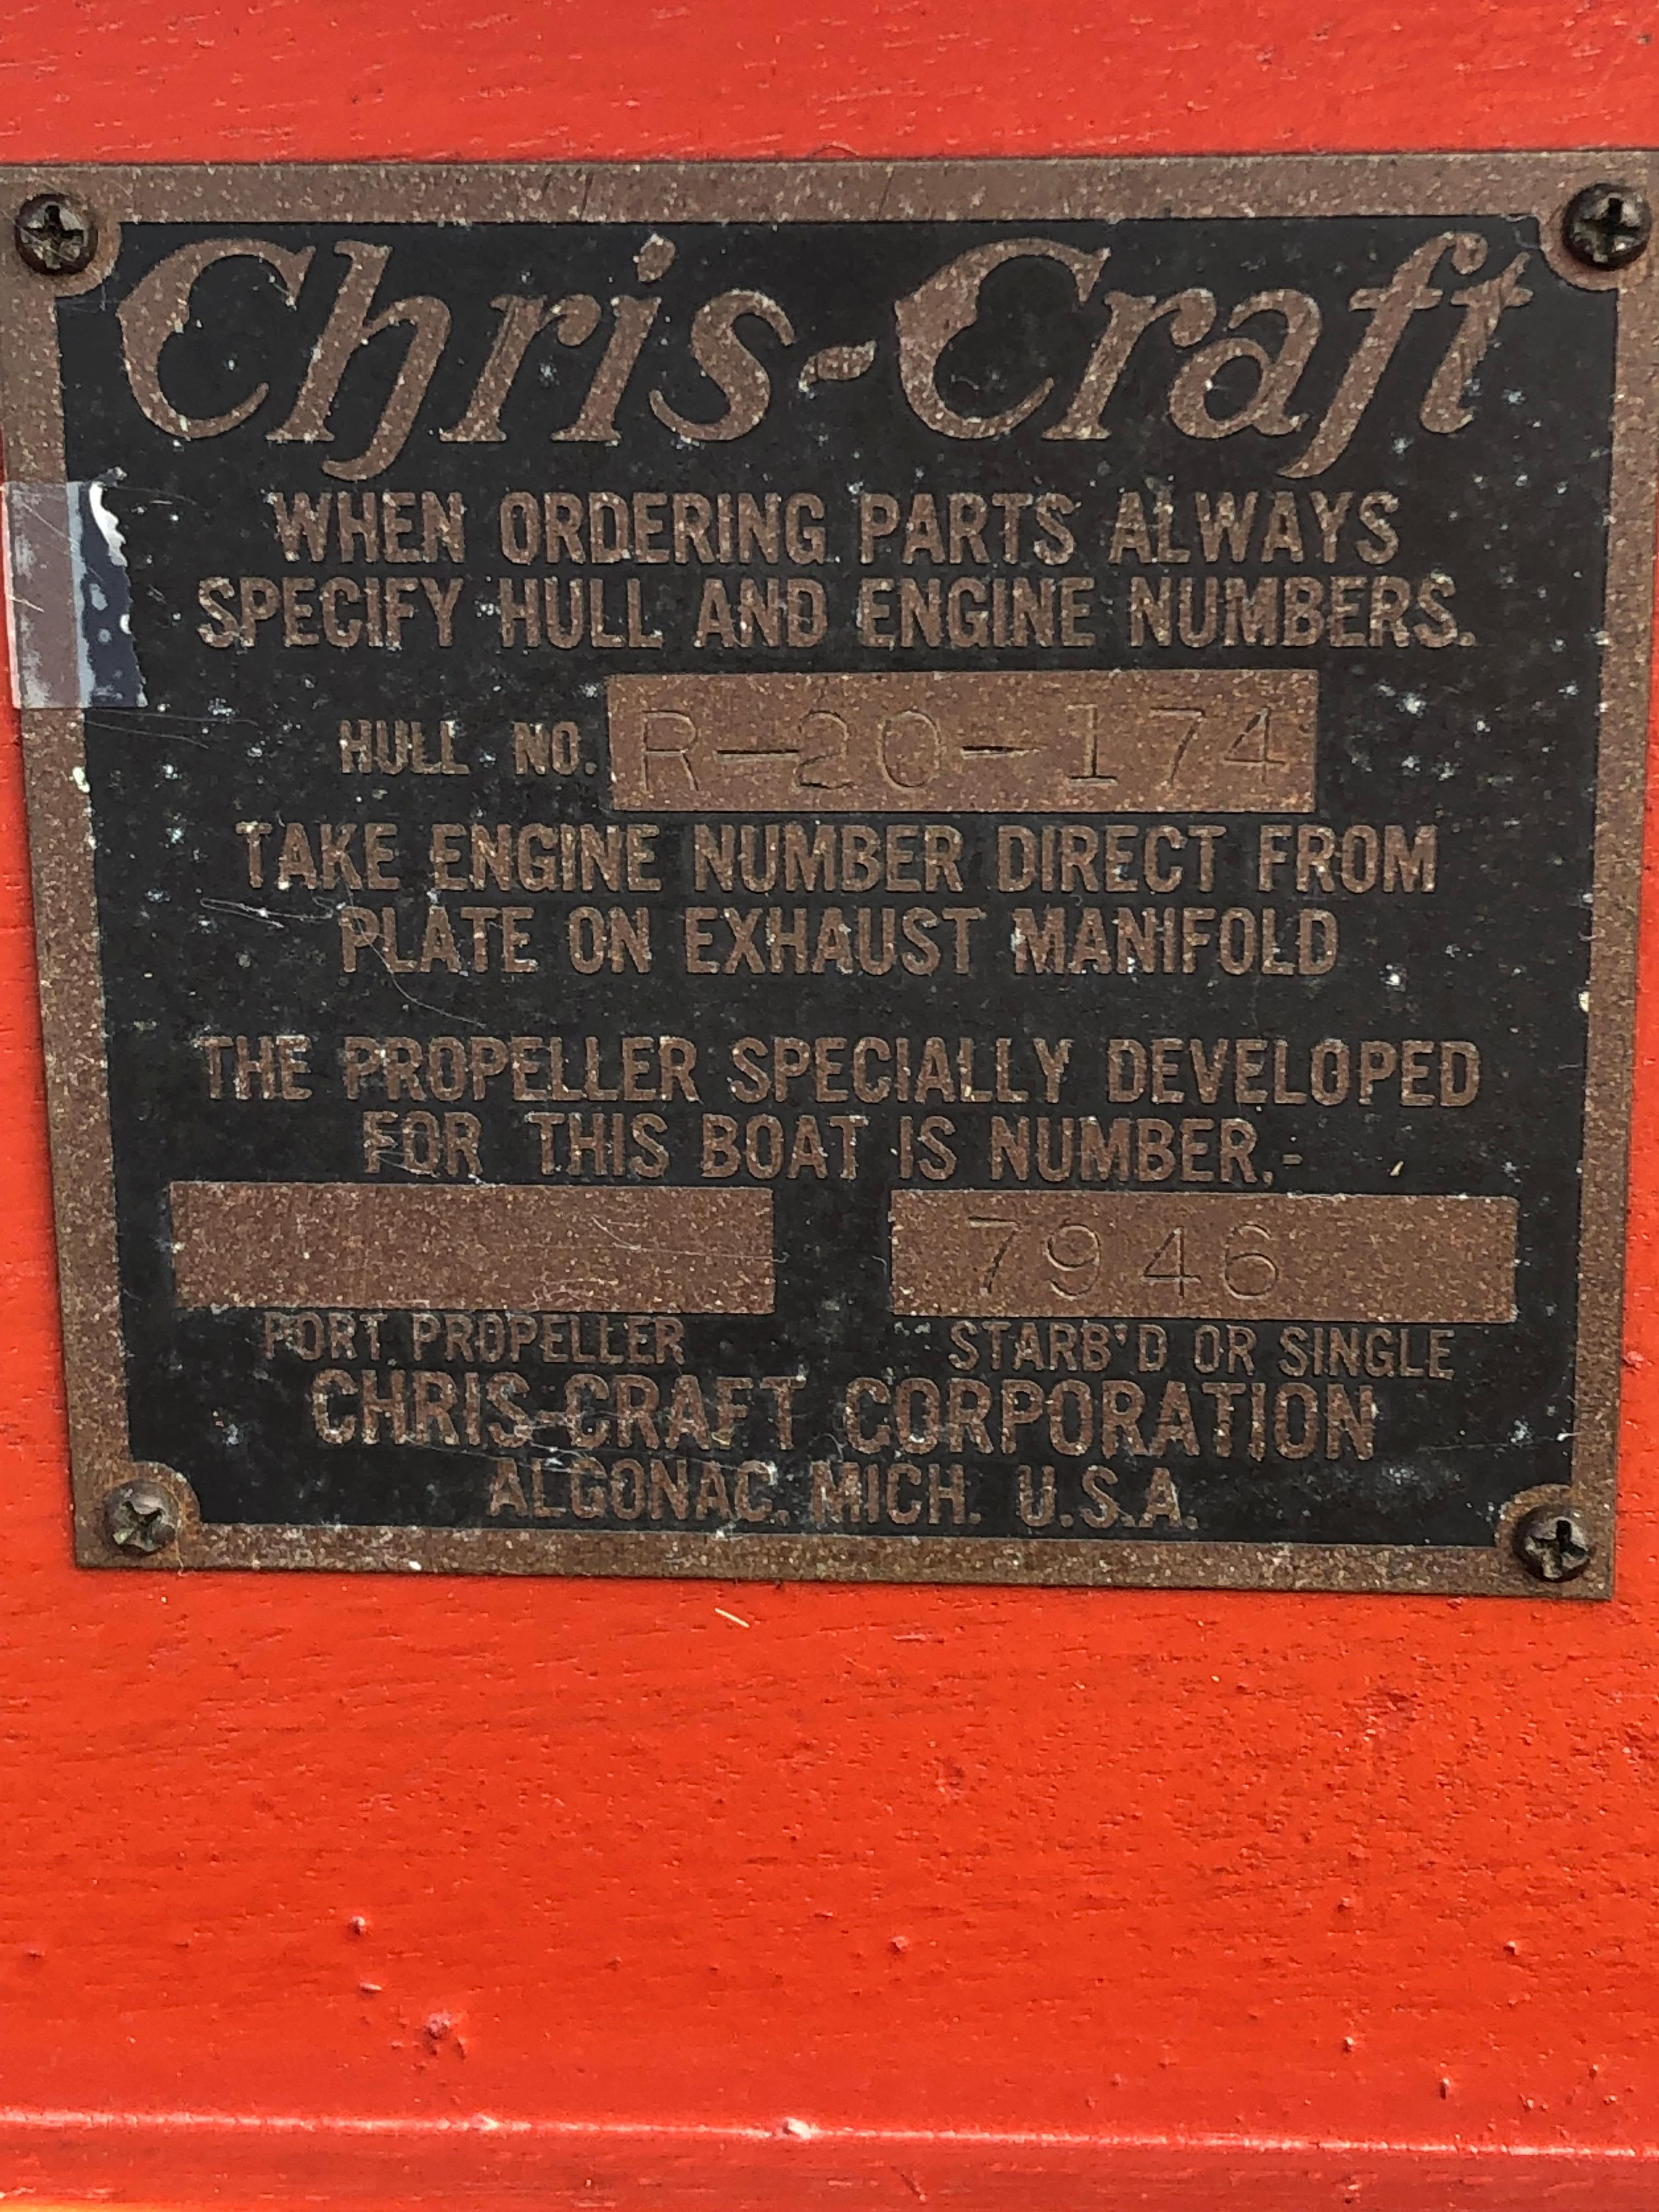 1947 Chris-Craft Speed boat